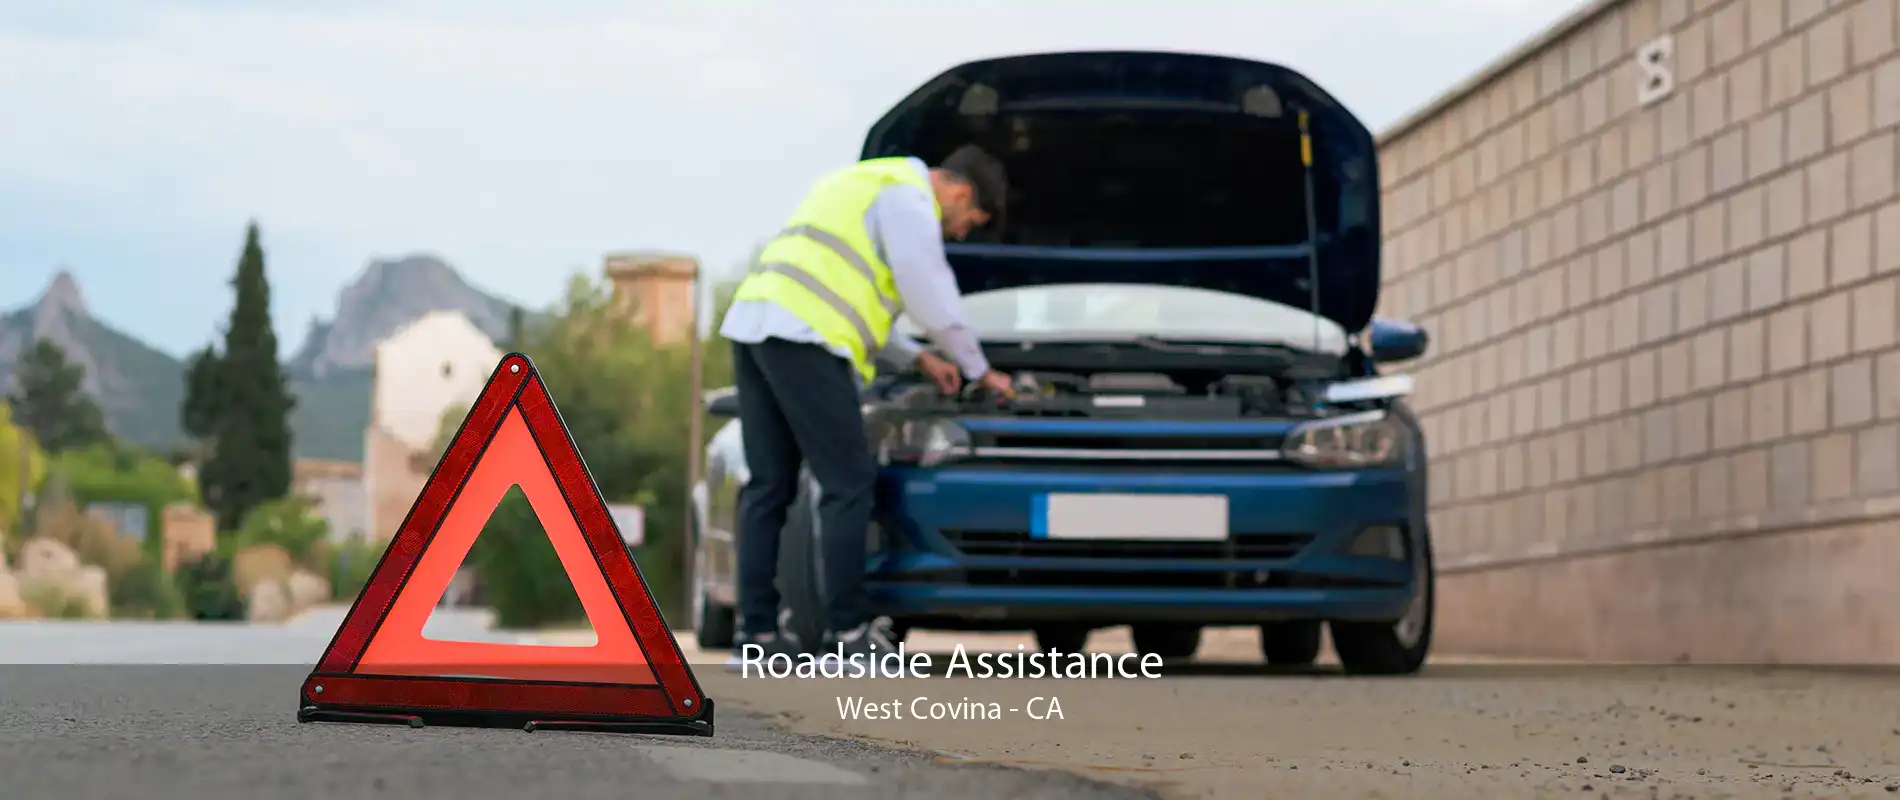 Roadside Assistance West Covina - CA